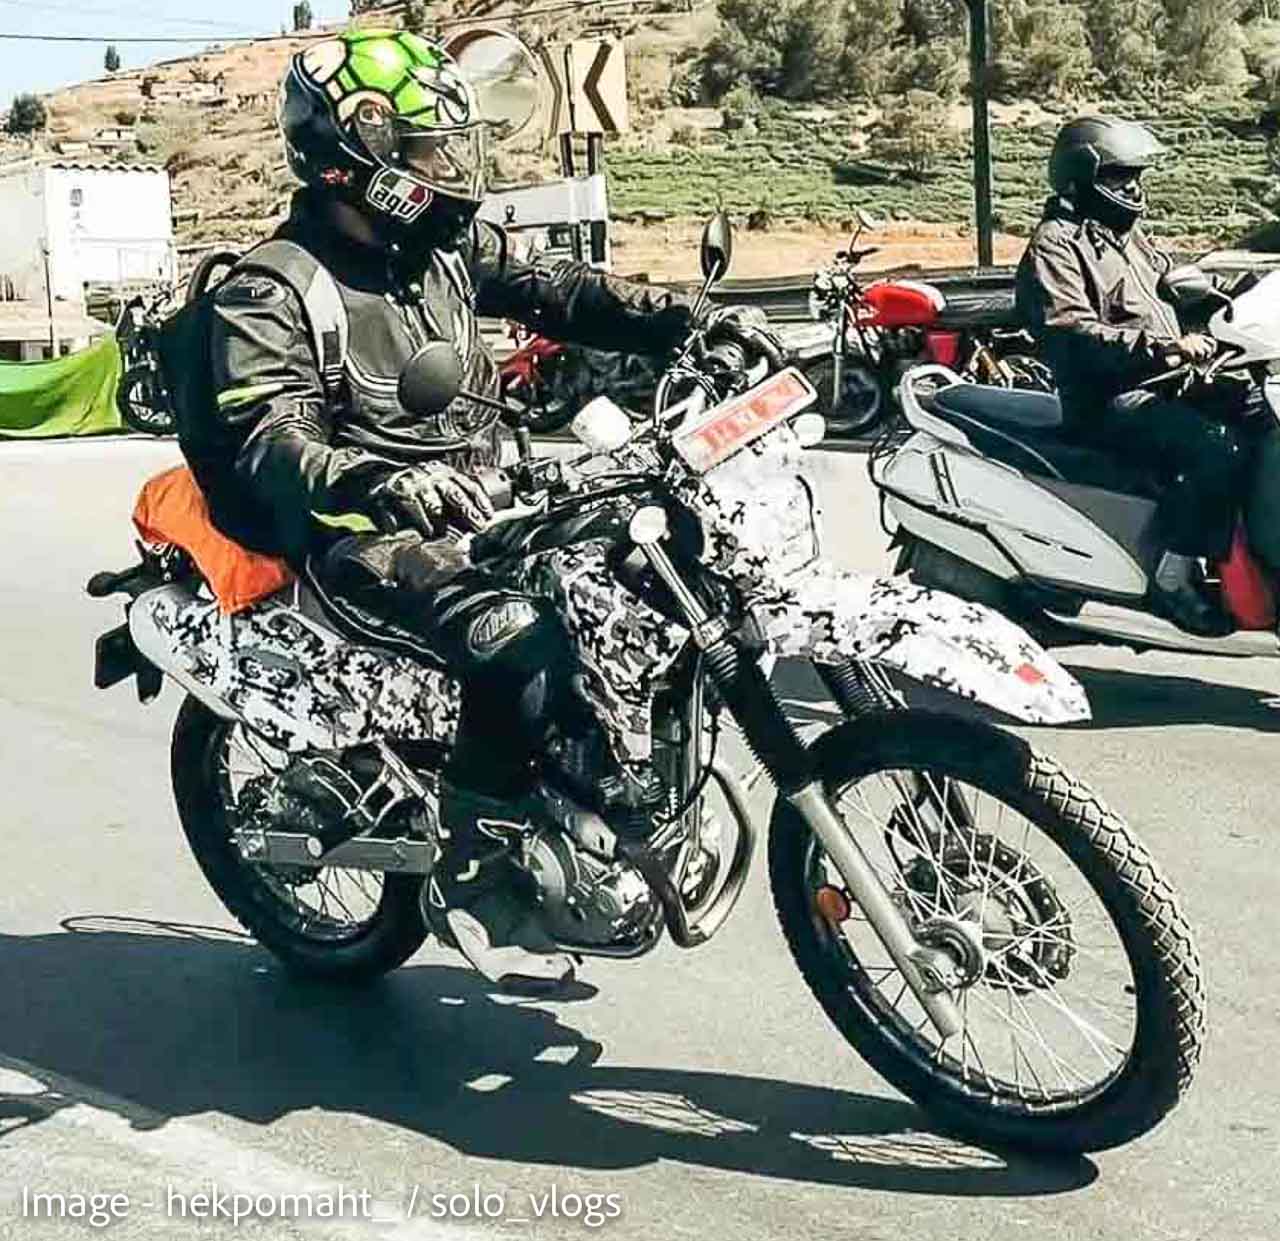 Yamaha ADV Motorcycle Spied - Fascia